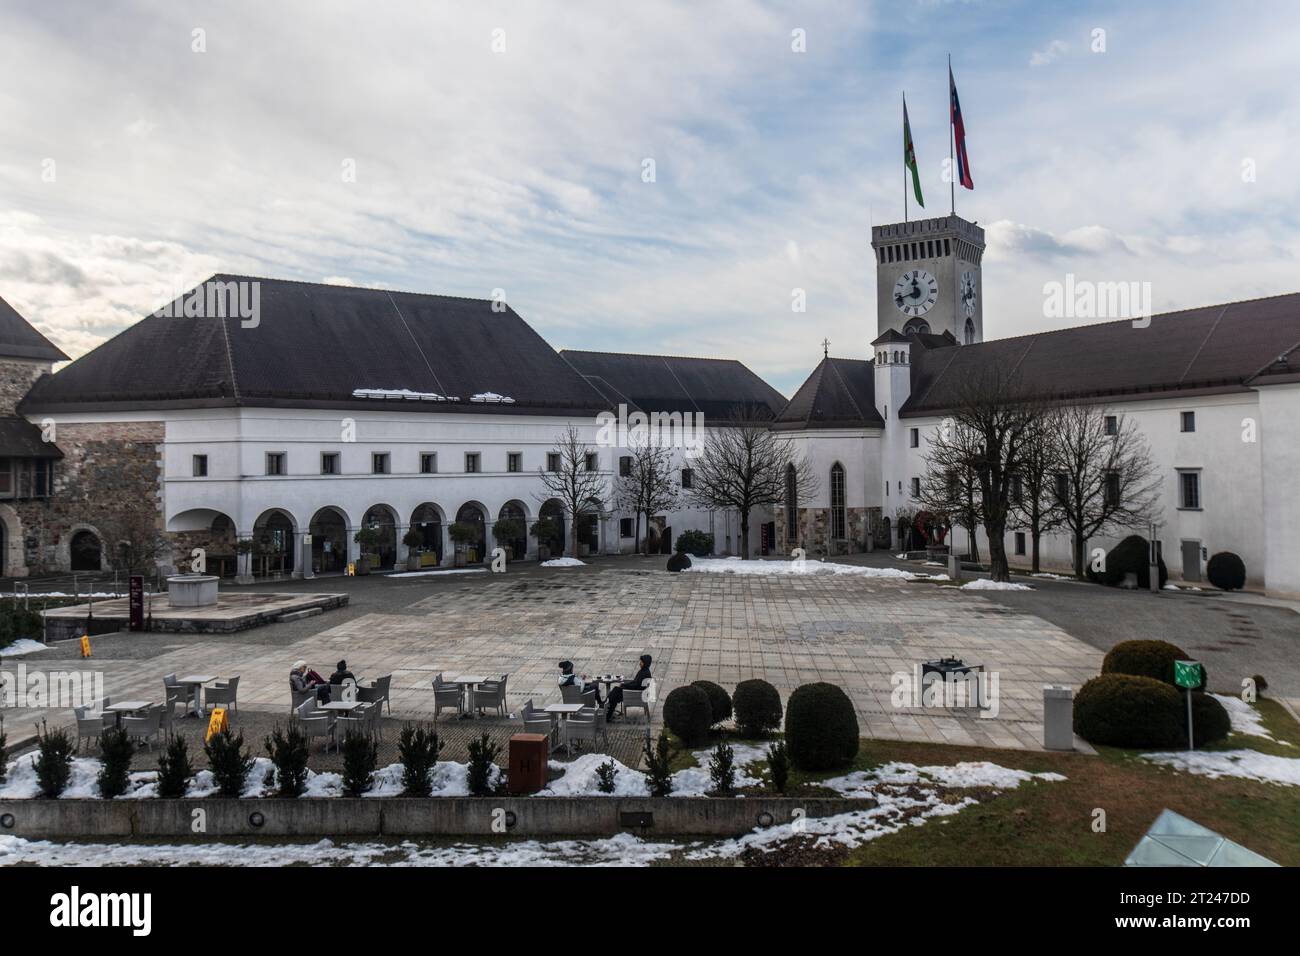 Ljubljana Castle, snowed interior during winter. Slovenia Stock Photo